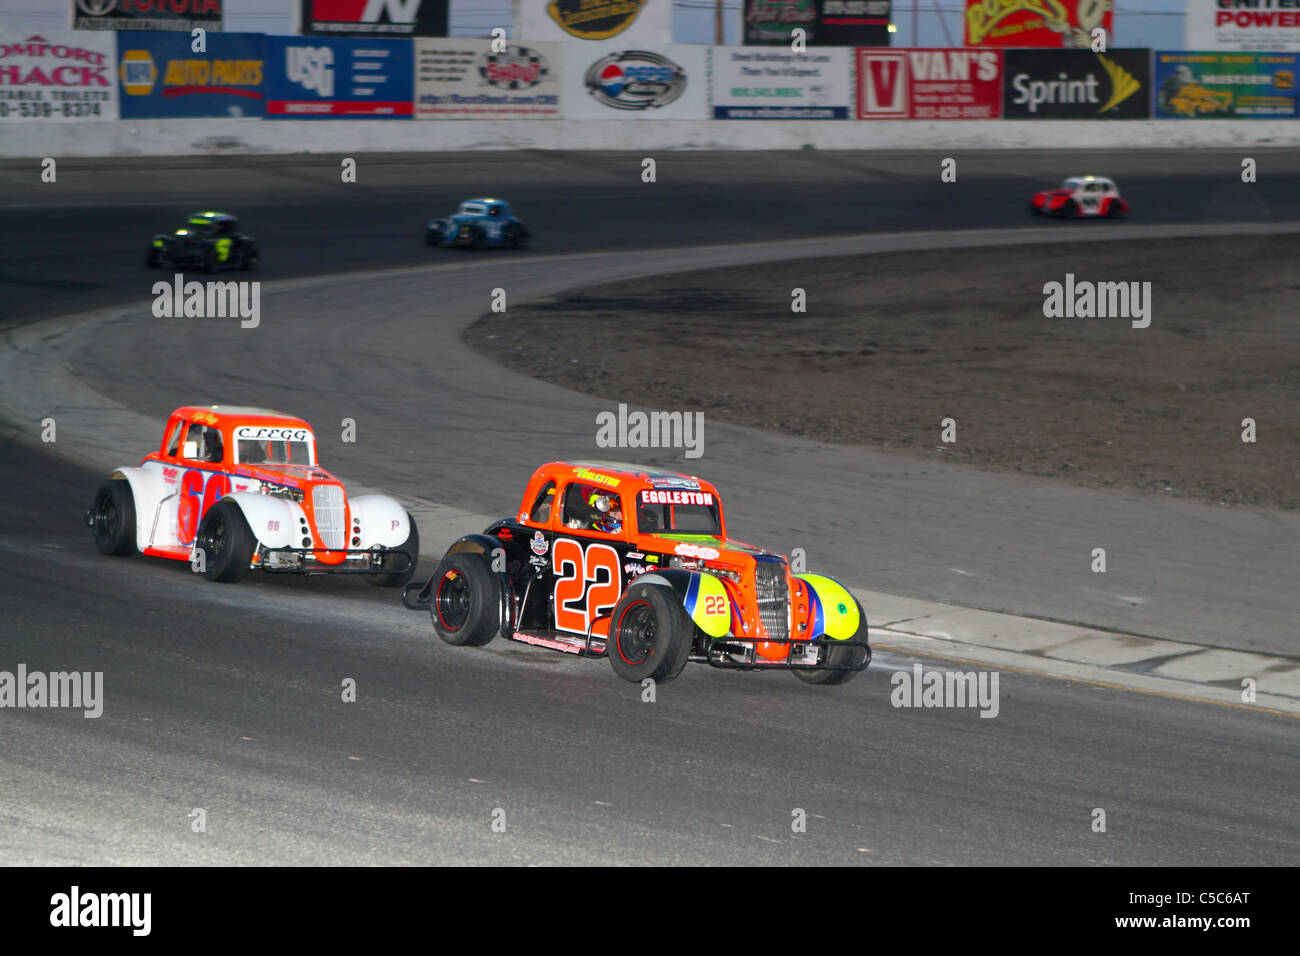 Denver, Colorado - Rookie NASCAR Truck Series driver Chris Eggleston leads the Legends Car race. Stock Photo